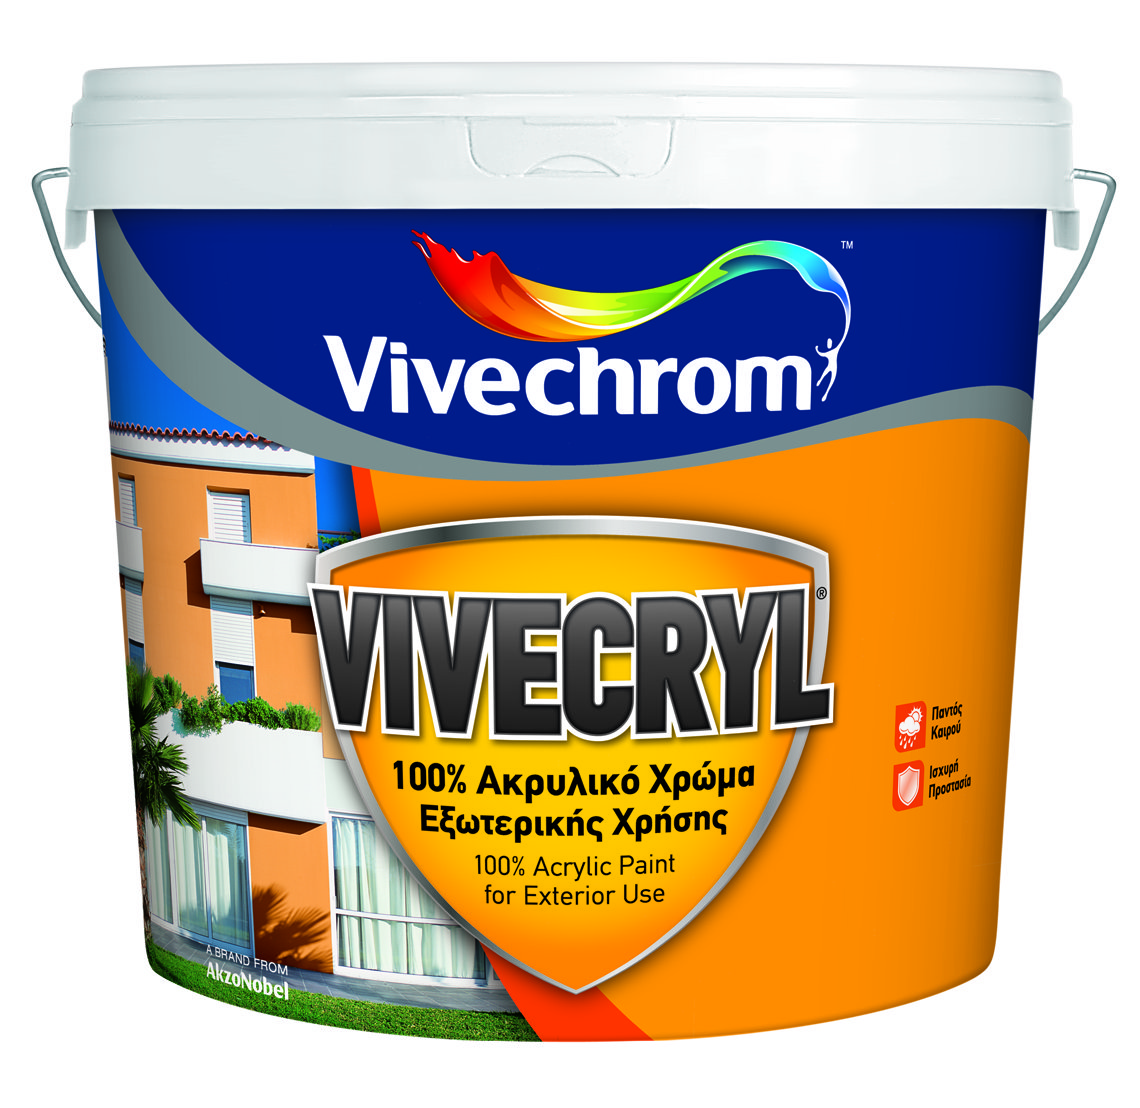 Vivechrom Vivecryl Ακρυλικό Οικολογικό Χρώμα Matt Finish Βάση TR 1L